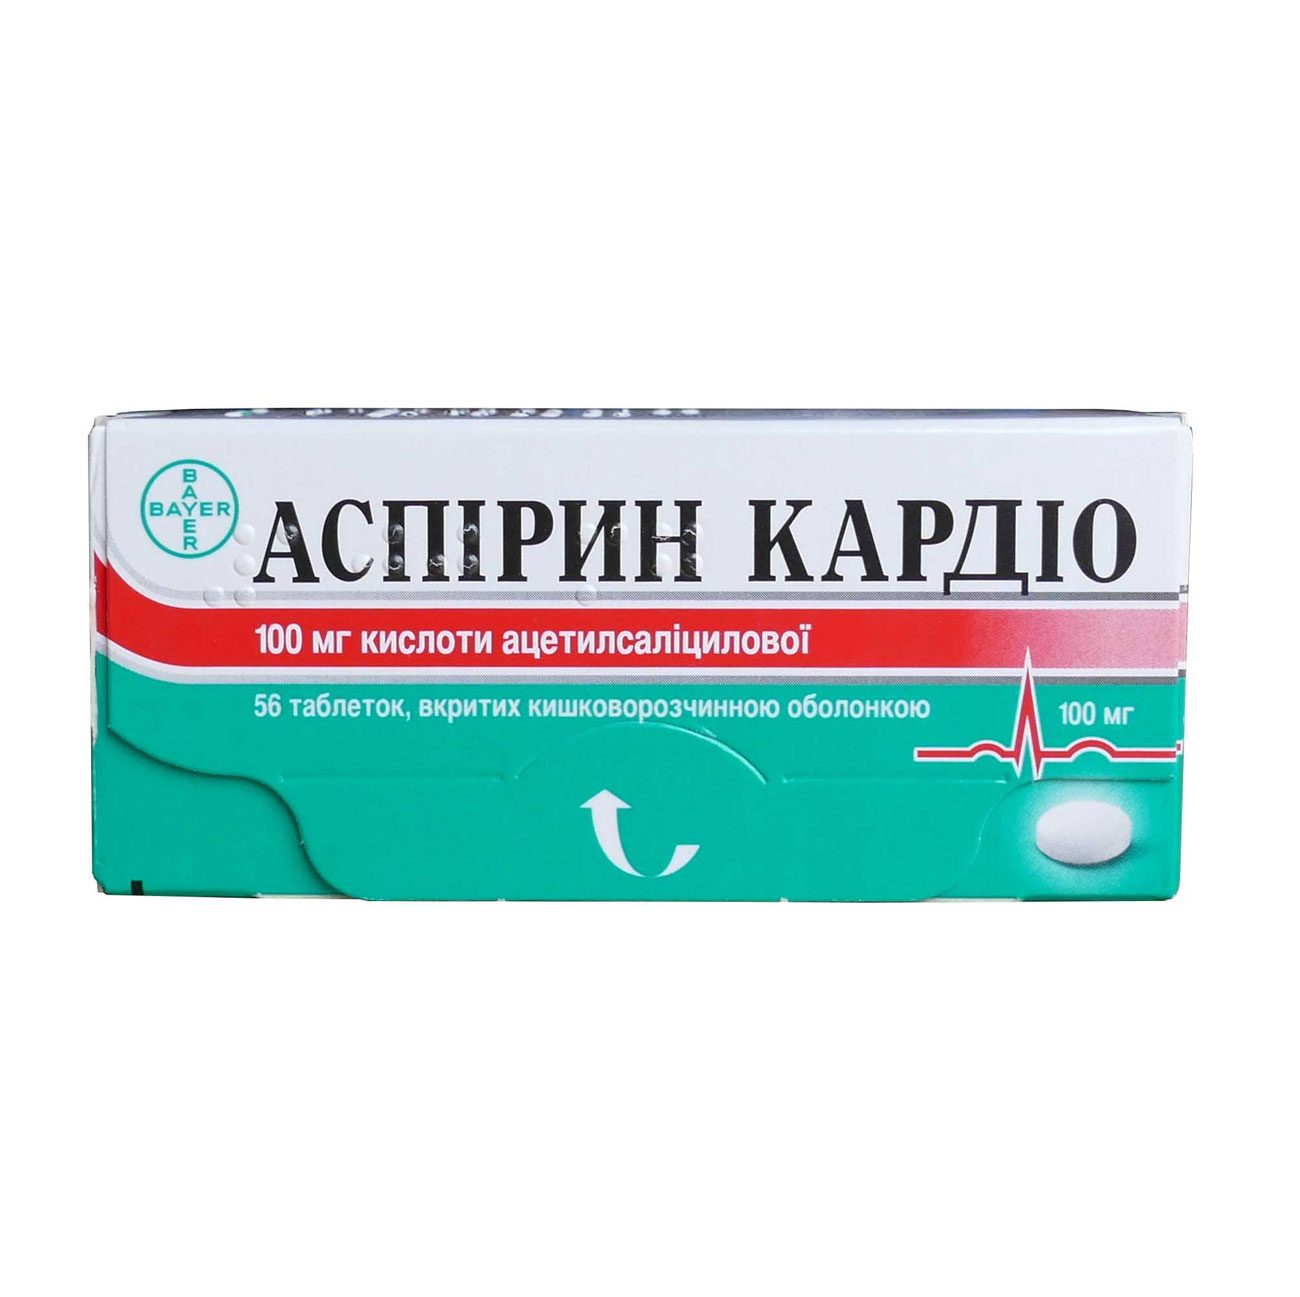 Аспирин ( ацетилсалициловая кислота ) - обсуждение